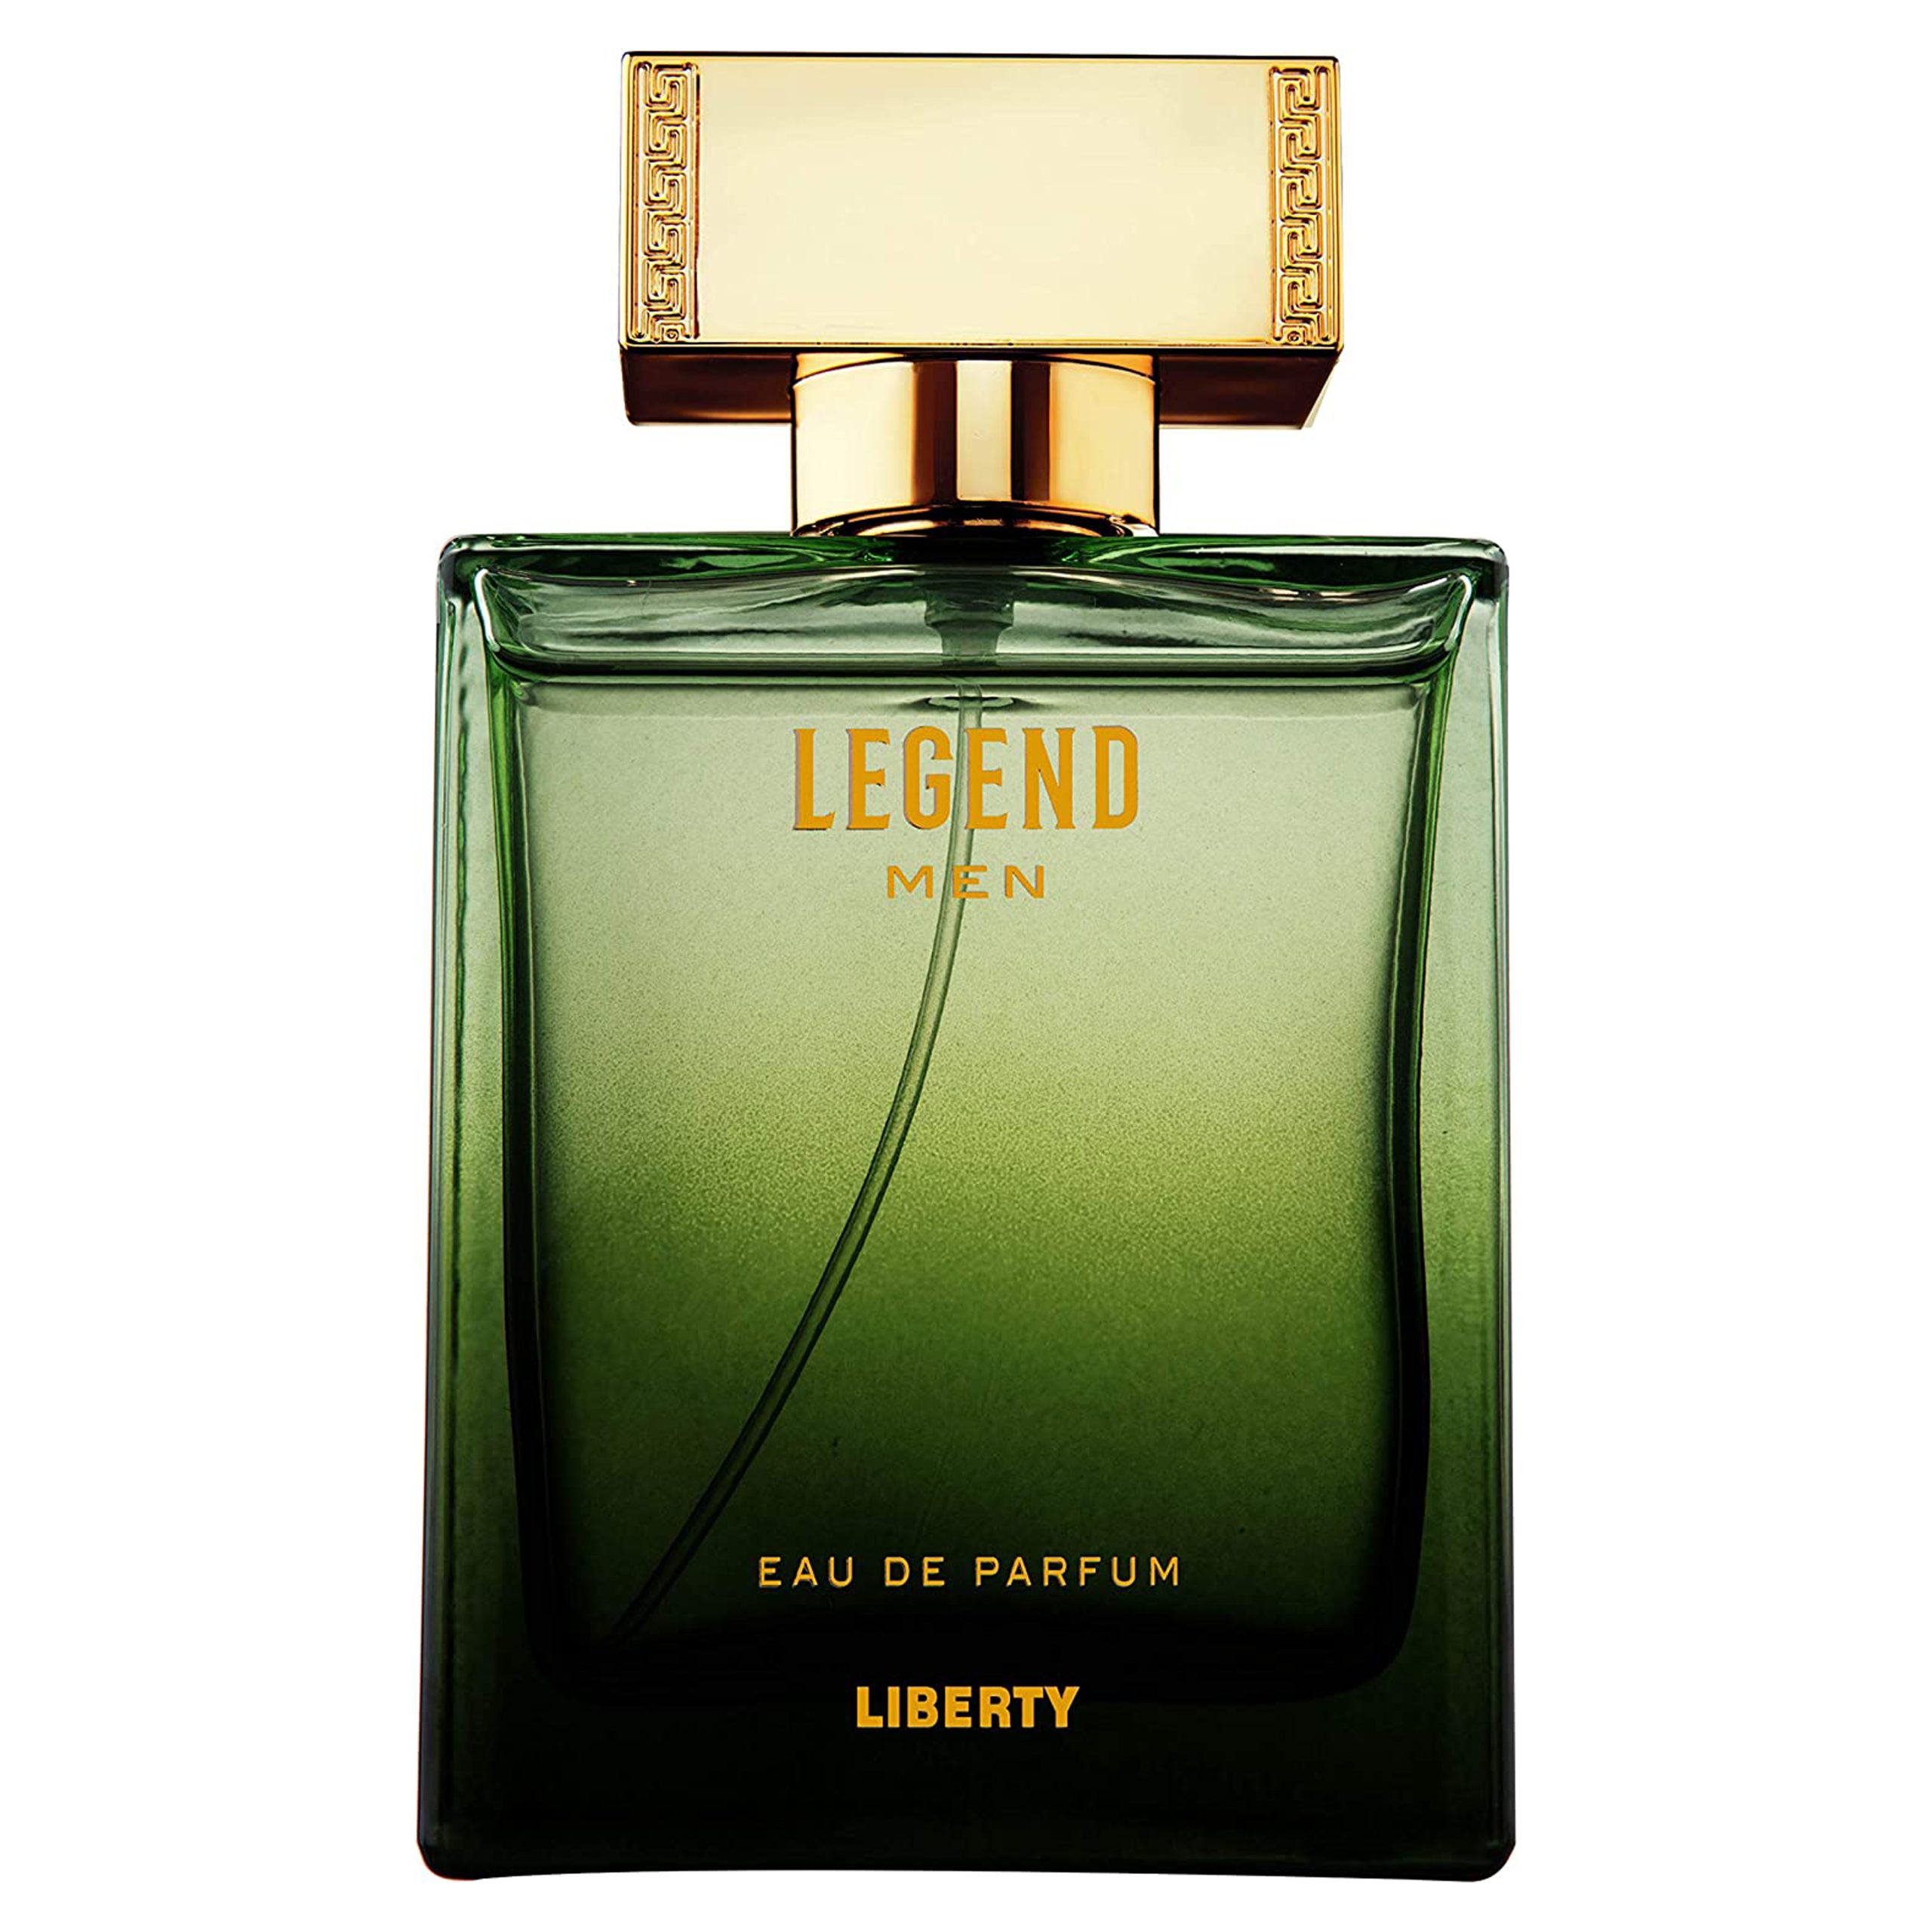 ادکلن ادو پرفیوم مردانه دج کالکشن مدل Luxury Legend